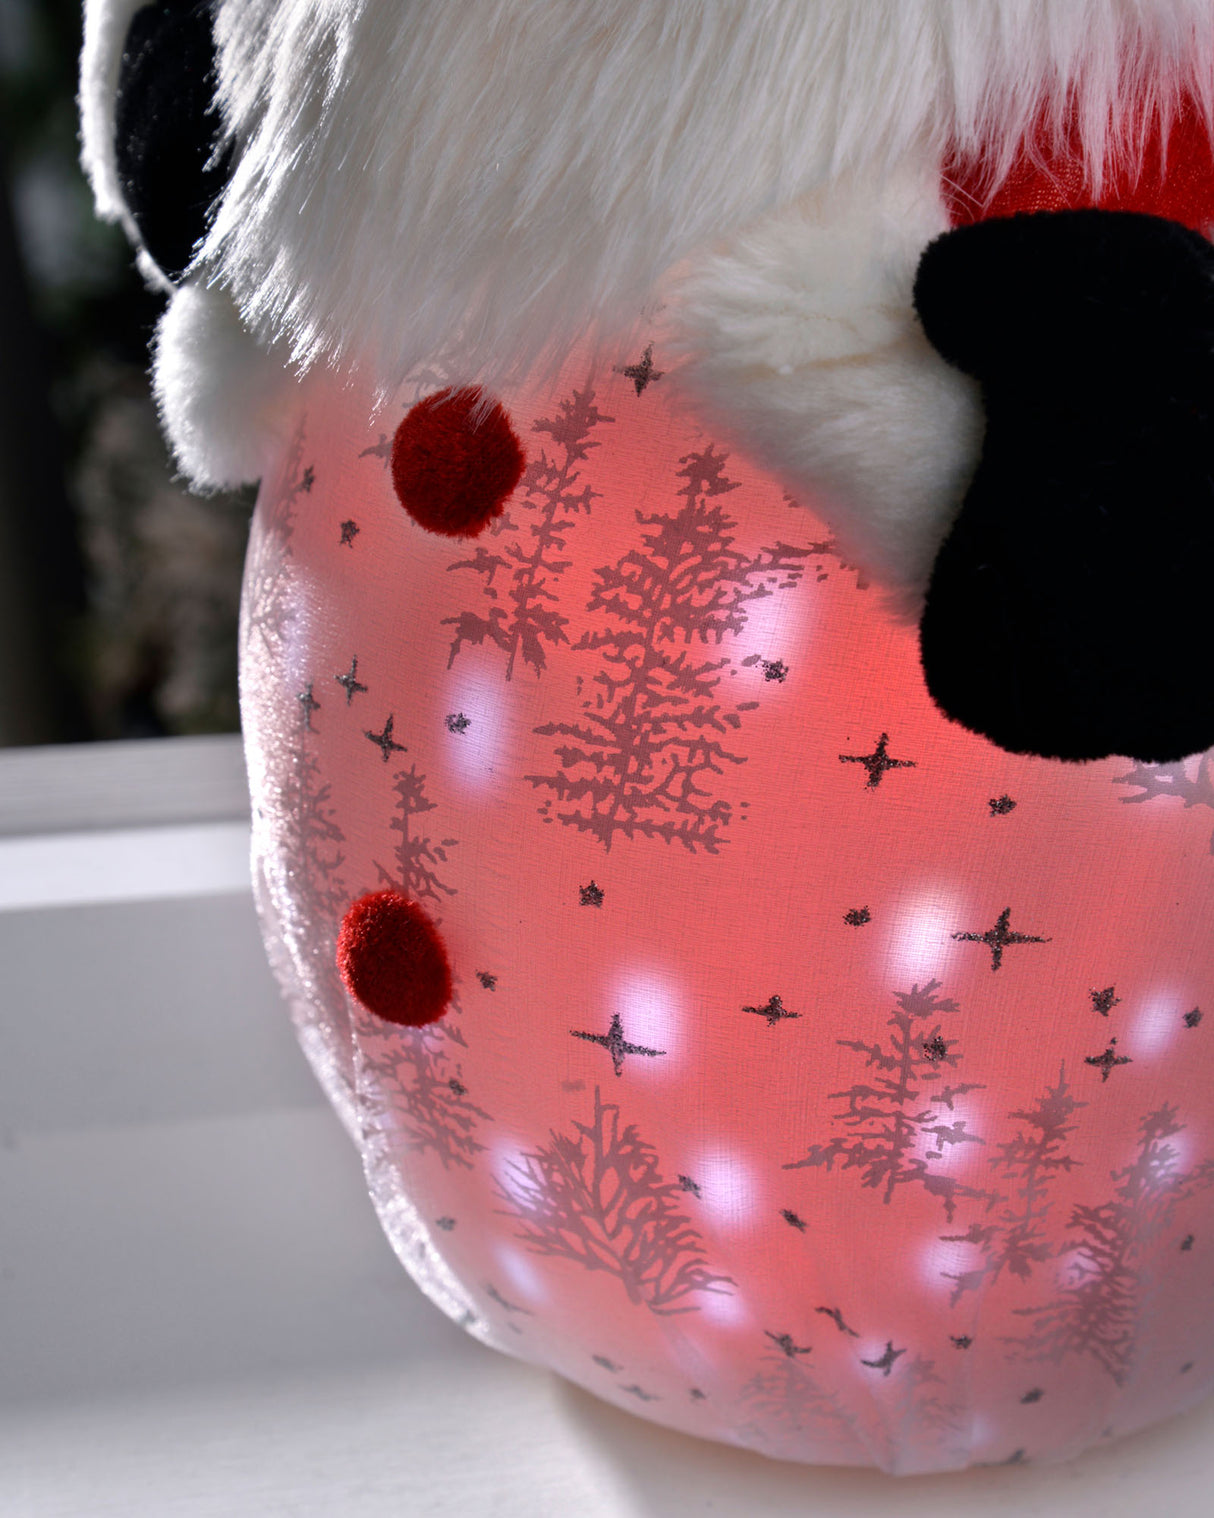 Pre-Lit Musical Santa with Snowfall Effect, 45 cm